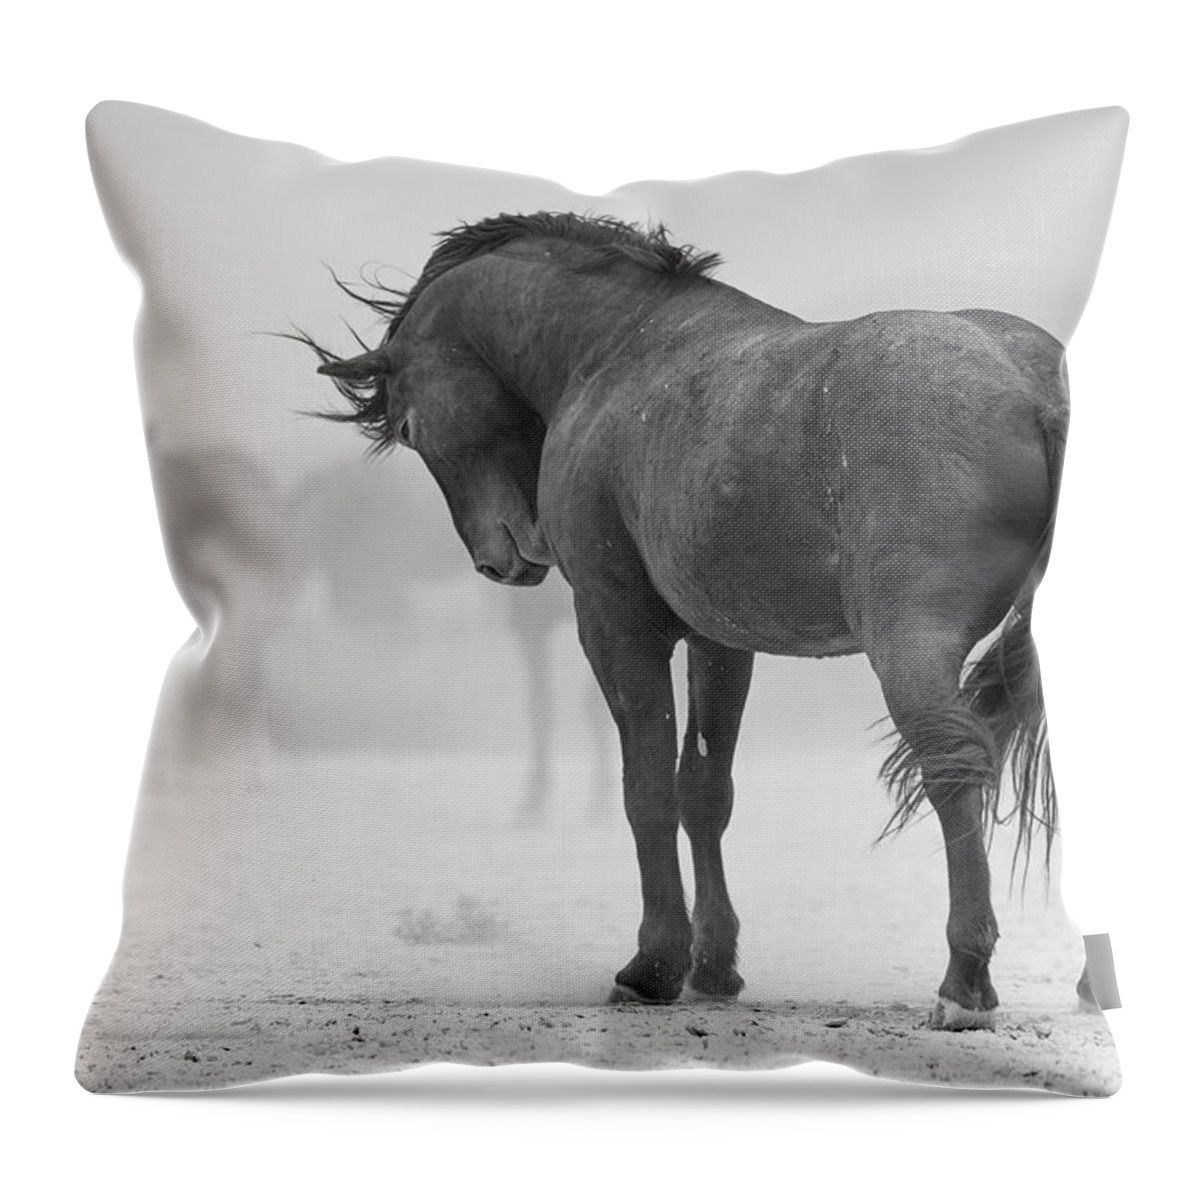 Stallion Throw Pillow featuring the photograph Stoic Stallion. by Paul Martin